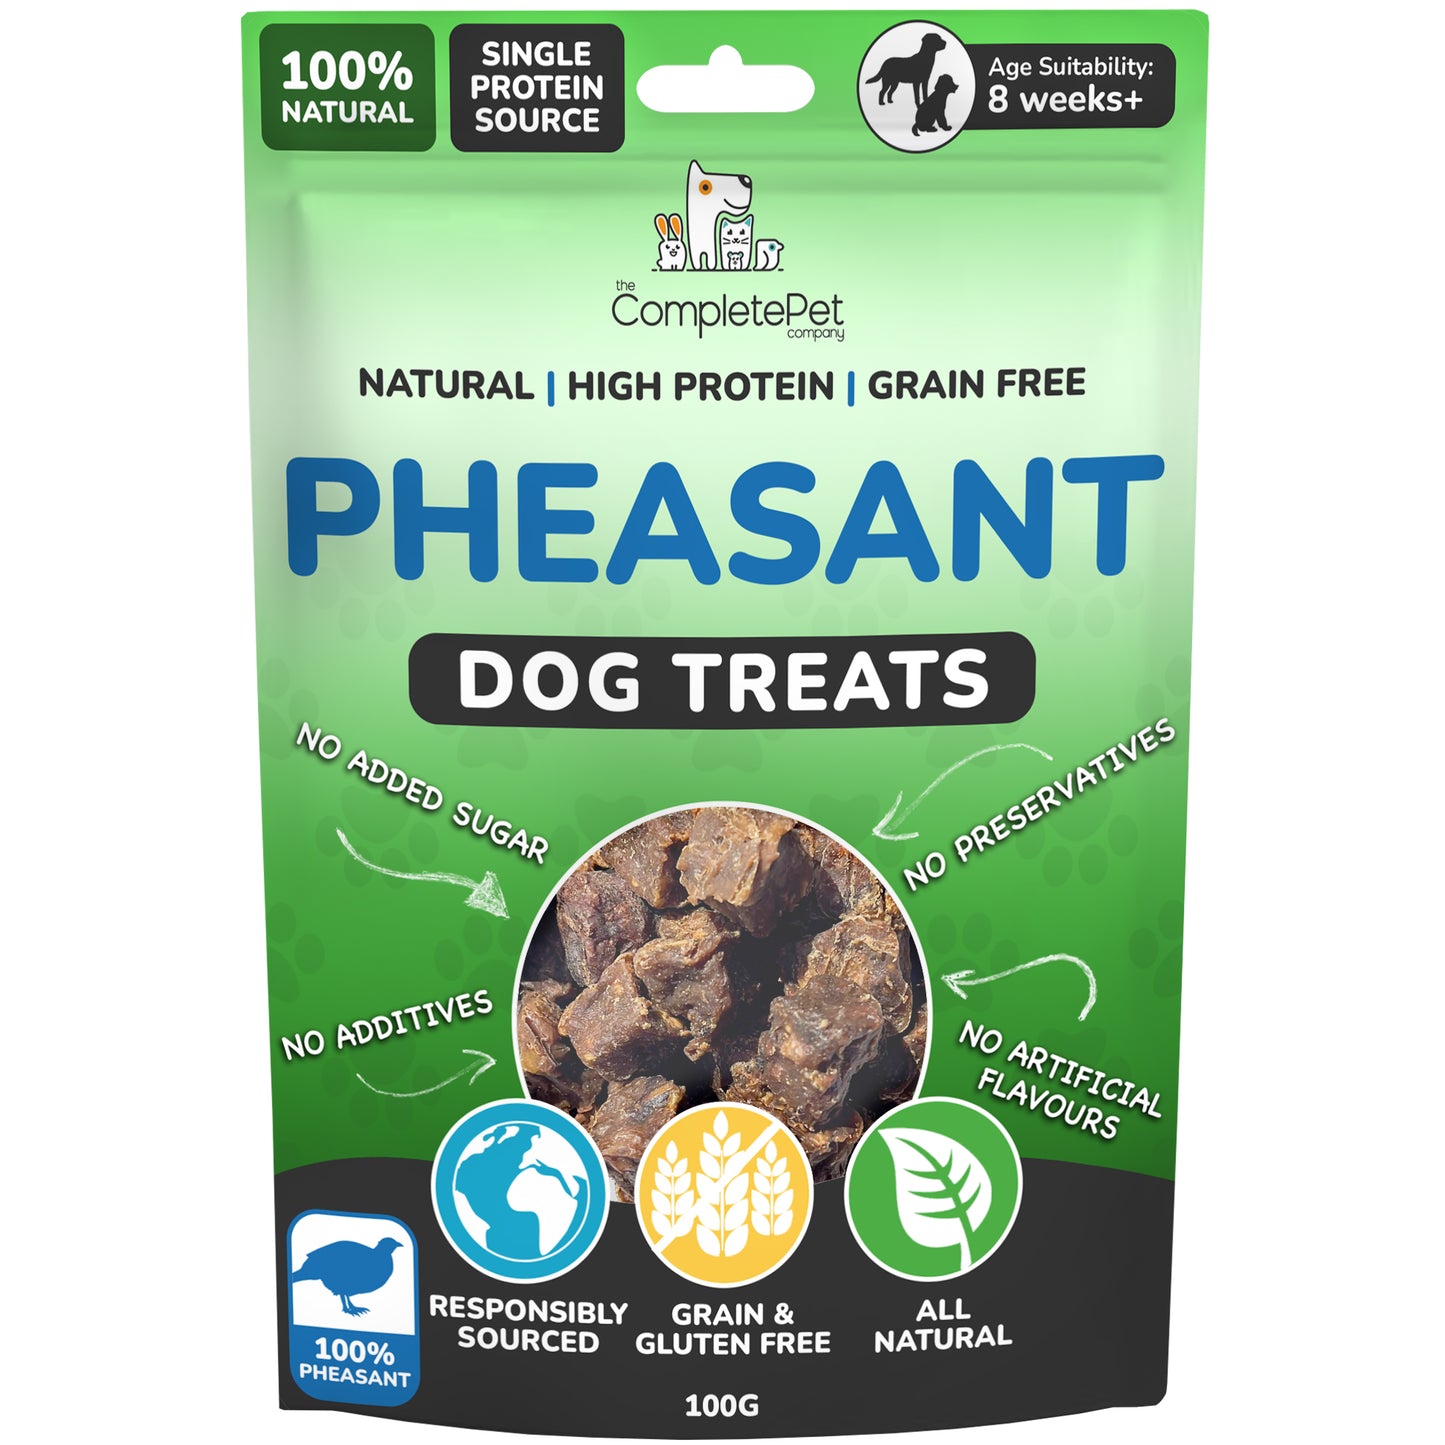 Natural Meat Dog Treats - PHEASANT - Low Fat Healthy Dog Training Treats